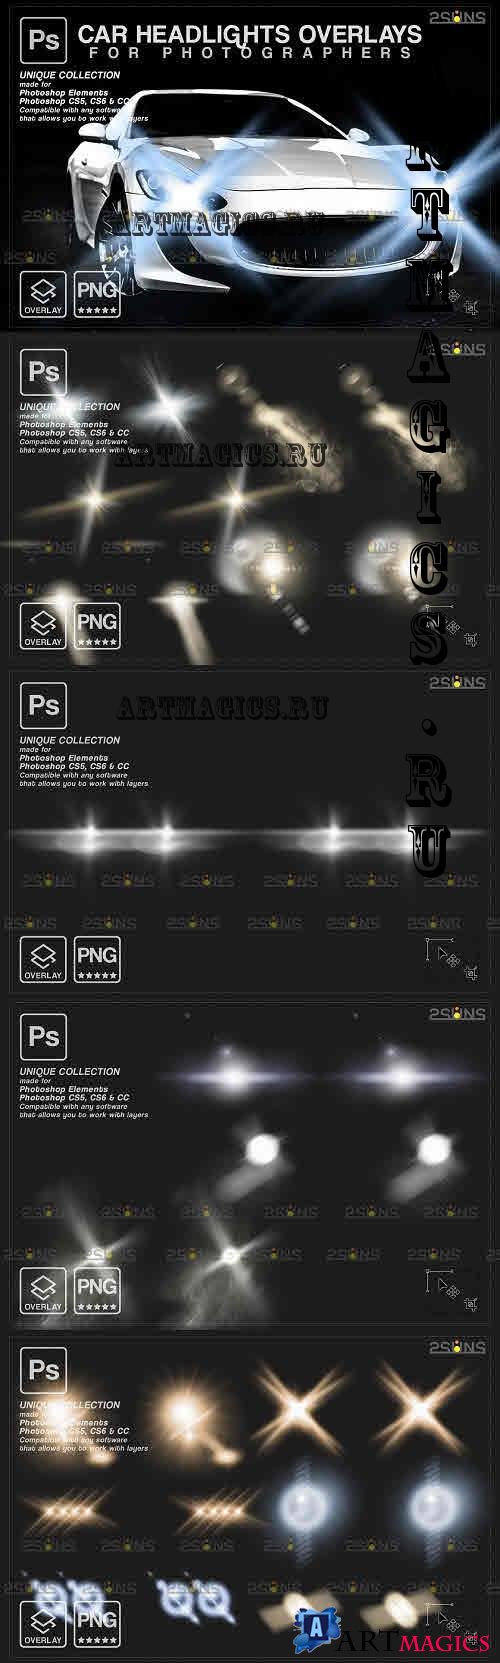 Car Headlights Photo Overlays V2 - 10943825